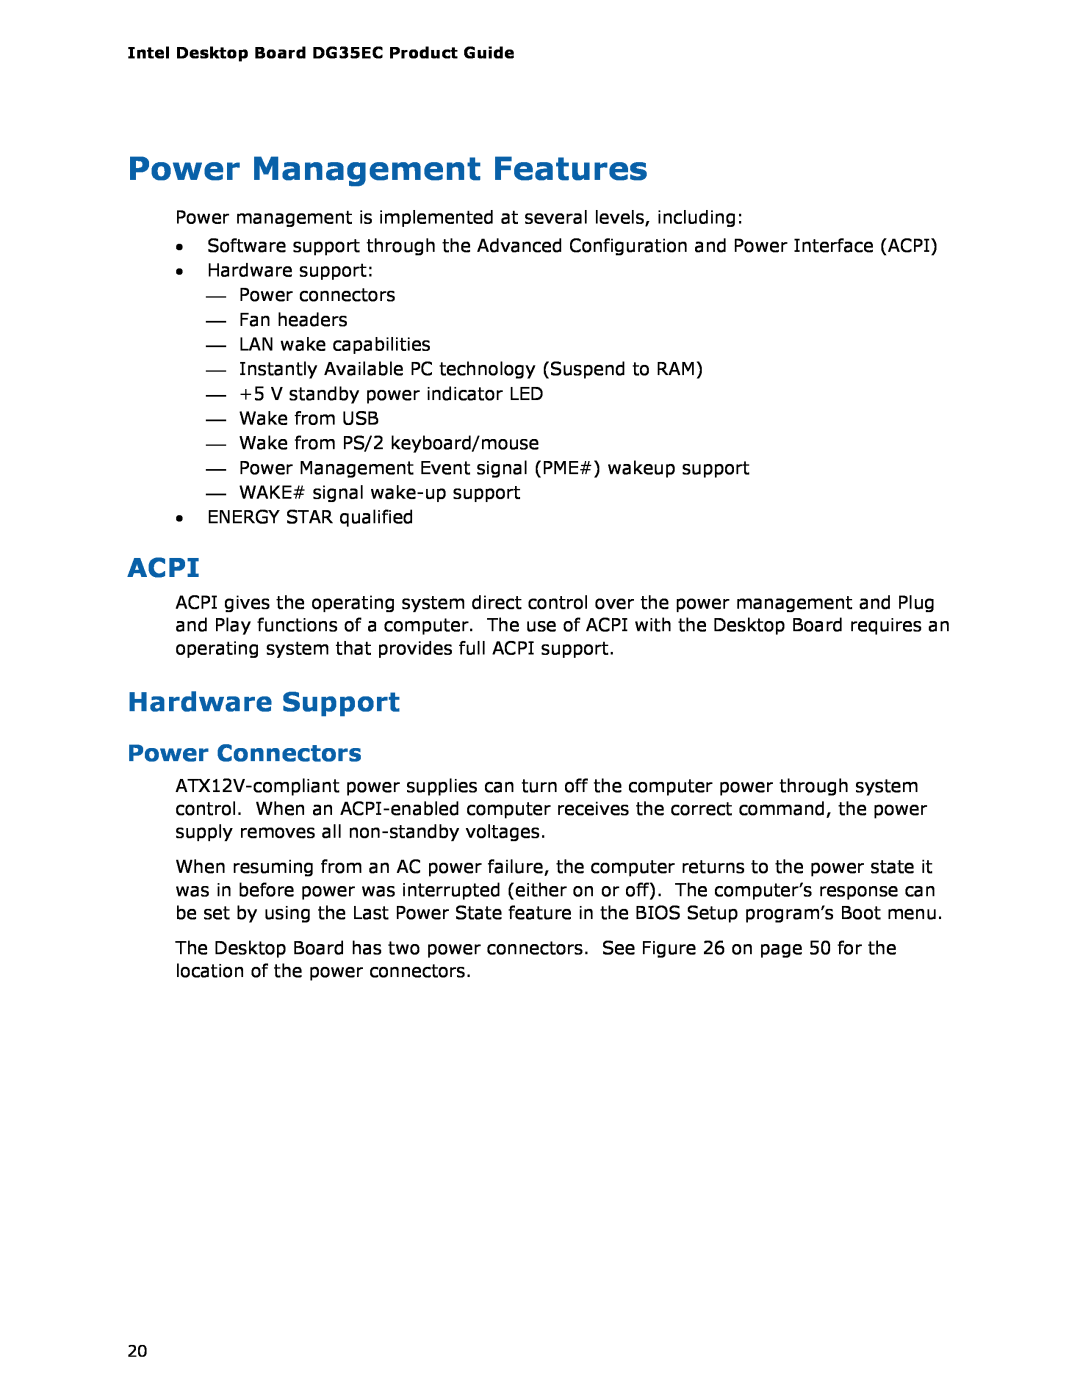 Intel Intel Desktop Board, DG35EC manual Power Management Features, Acpi, Hardware Support, Power Connectors 